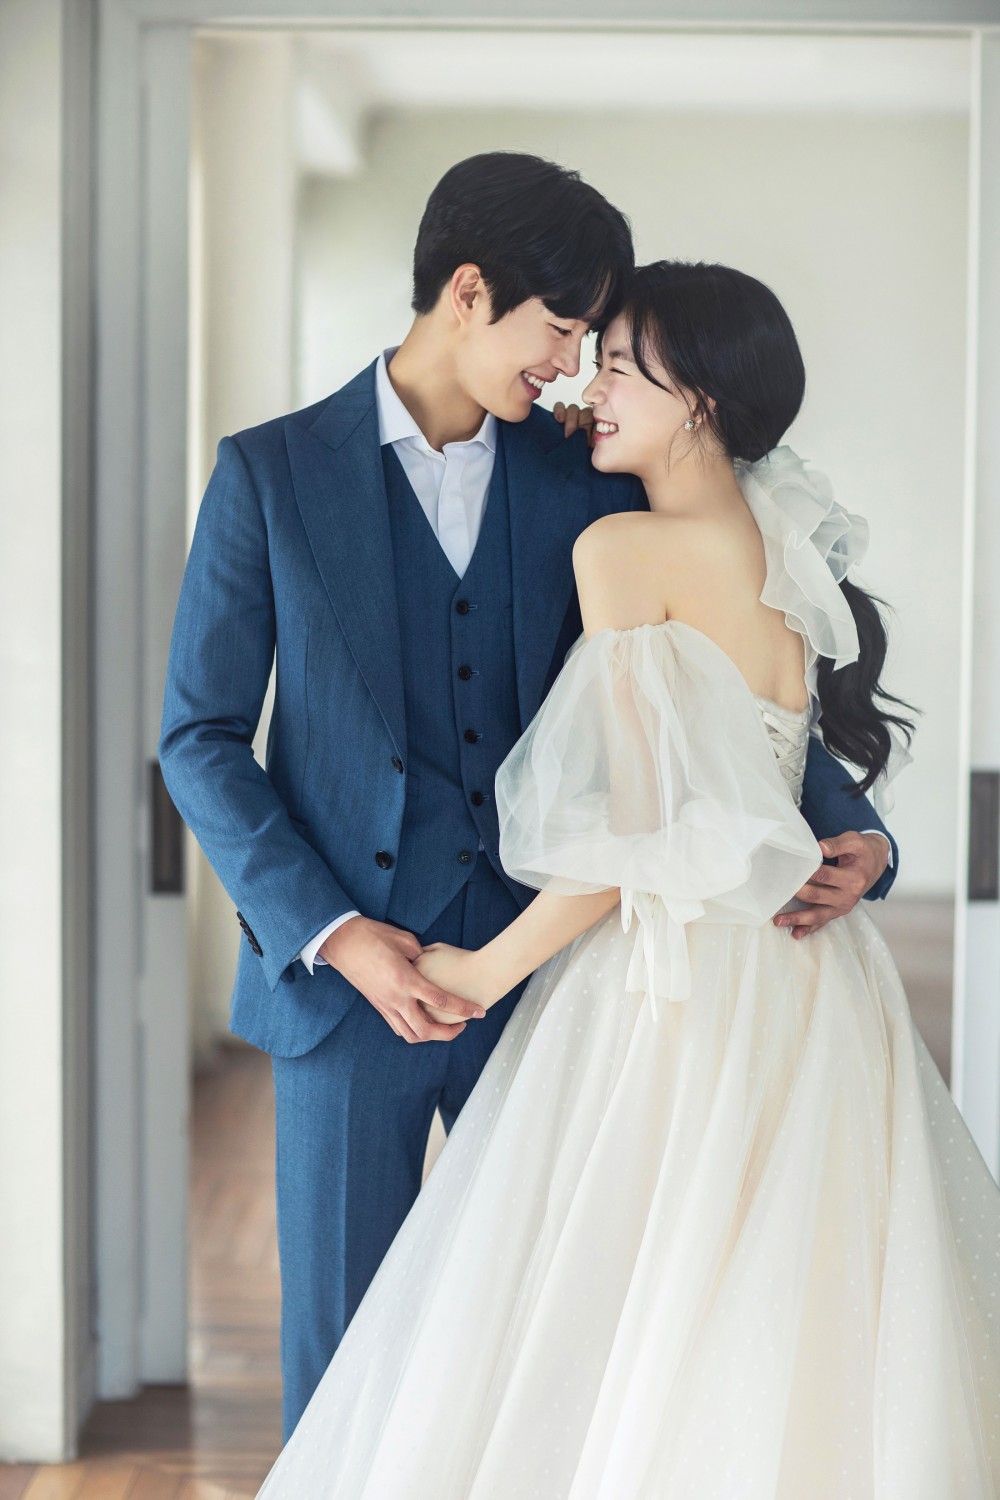 корейски свадебное фото